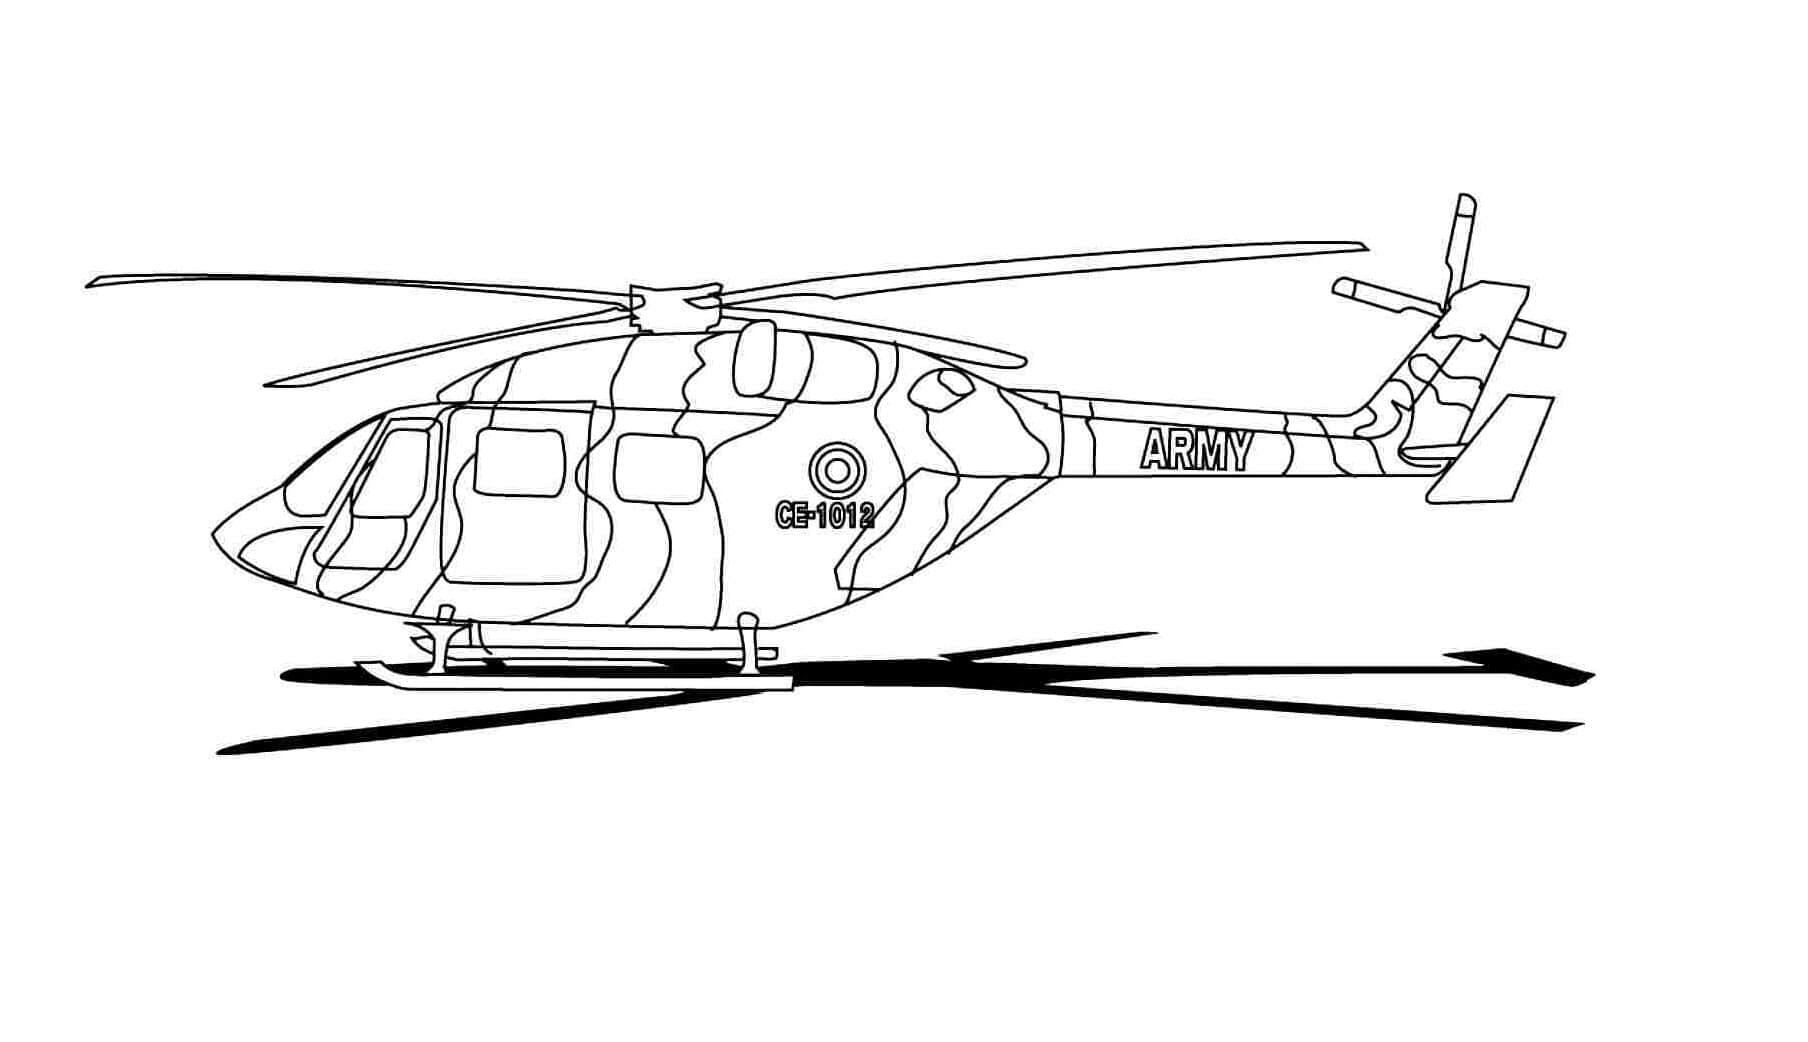 Army Helicopter CE 1012 Värityskuva